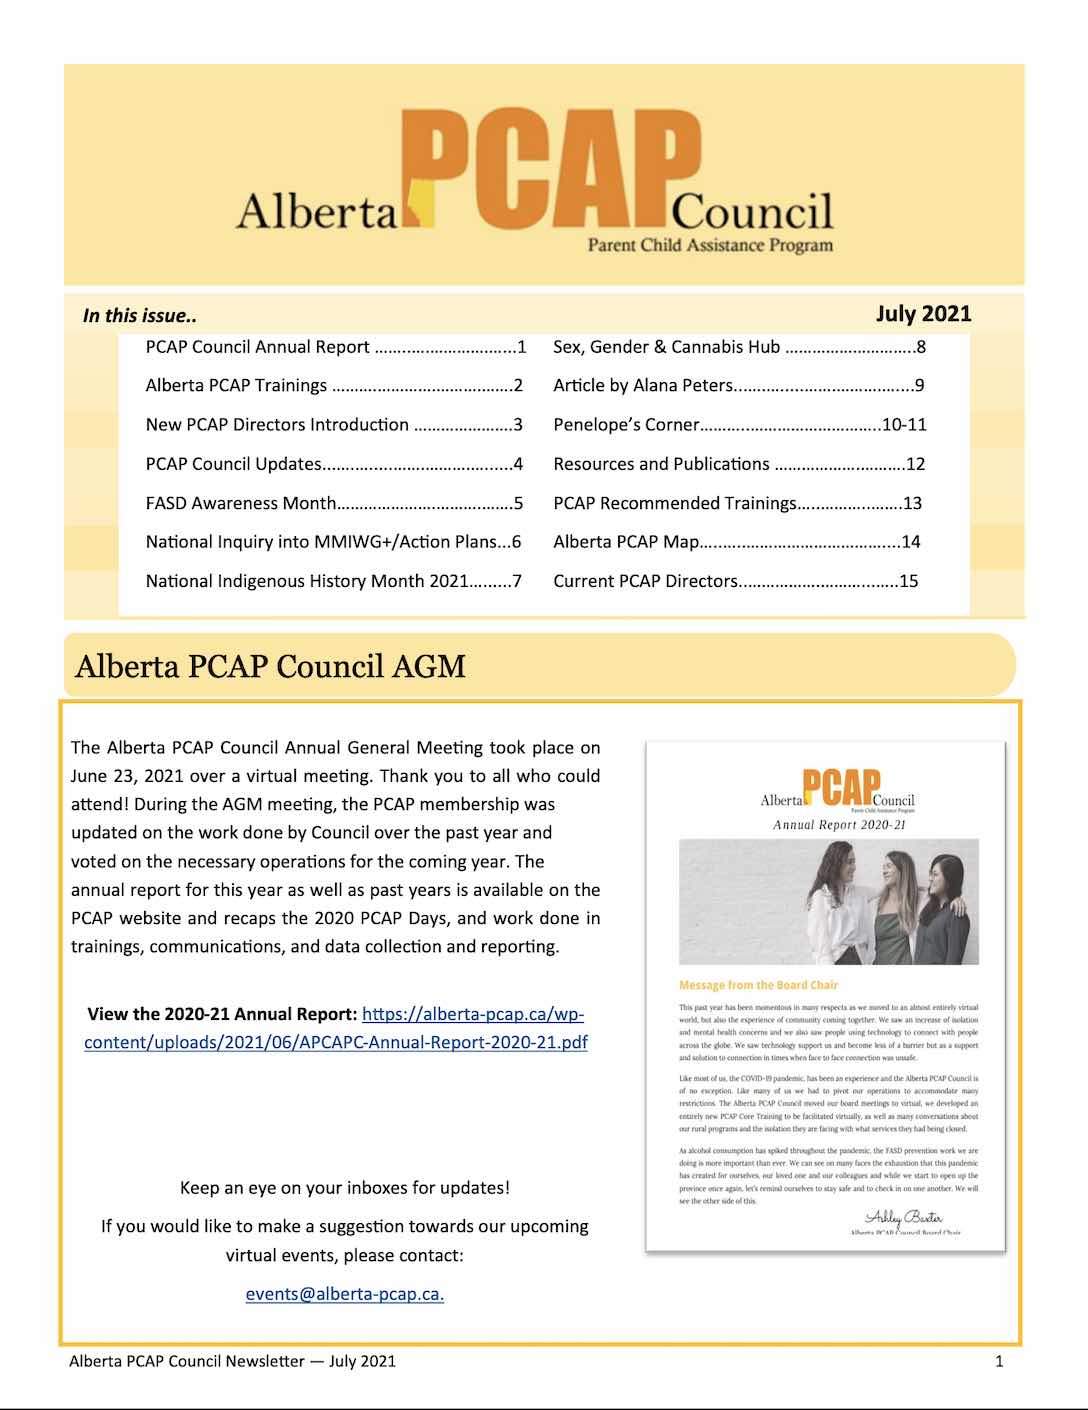 Alberta-PCAP-Council-Newsletter-July-2021-pdf-new